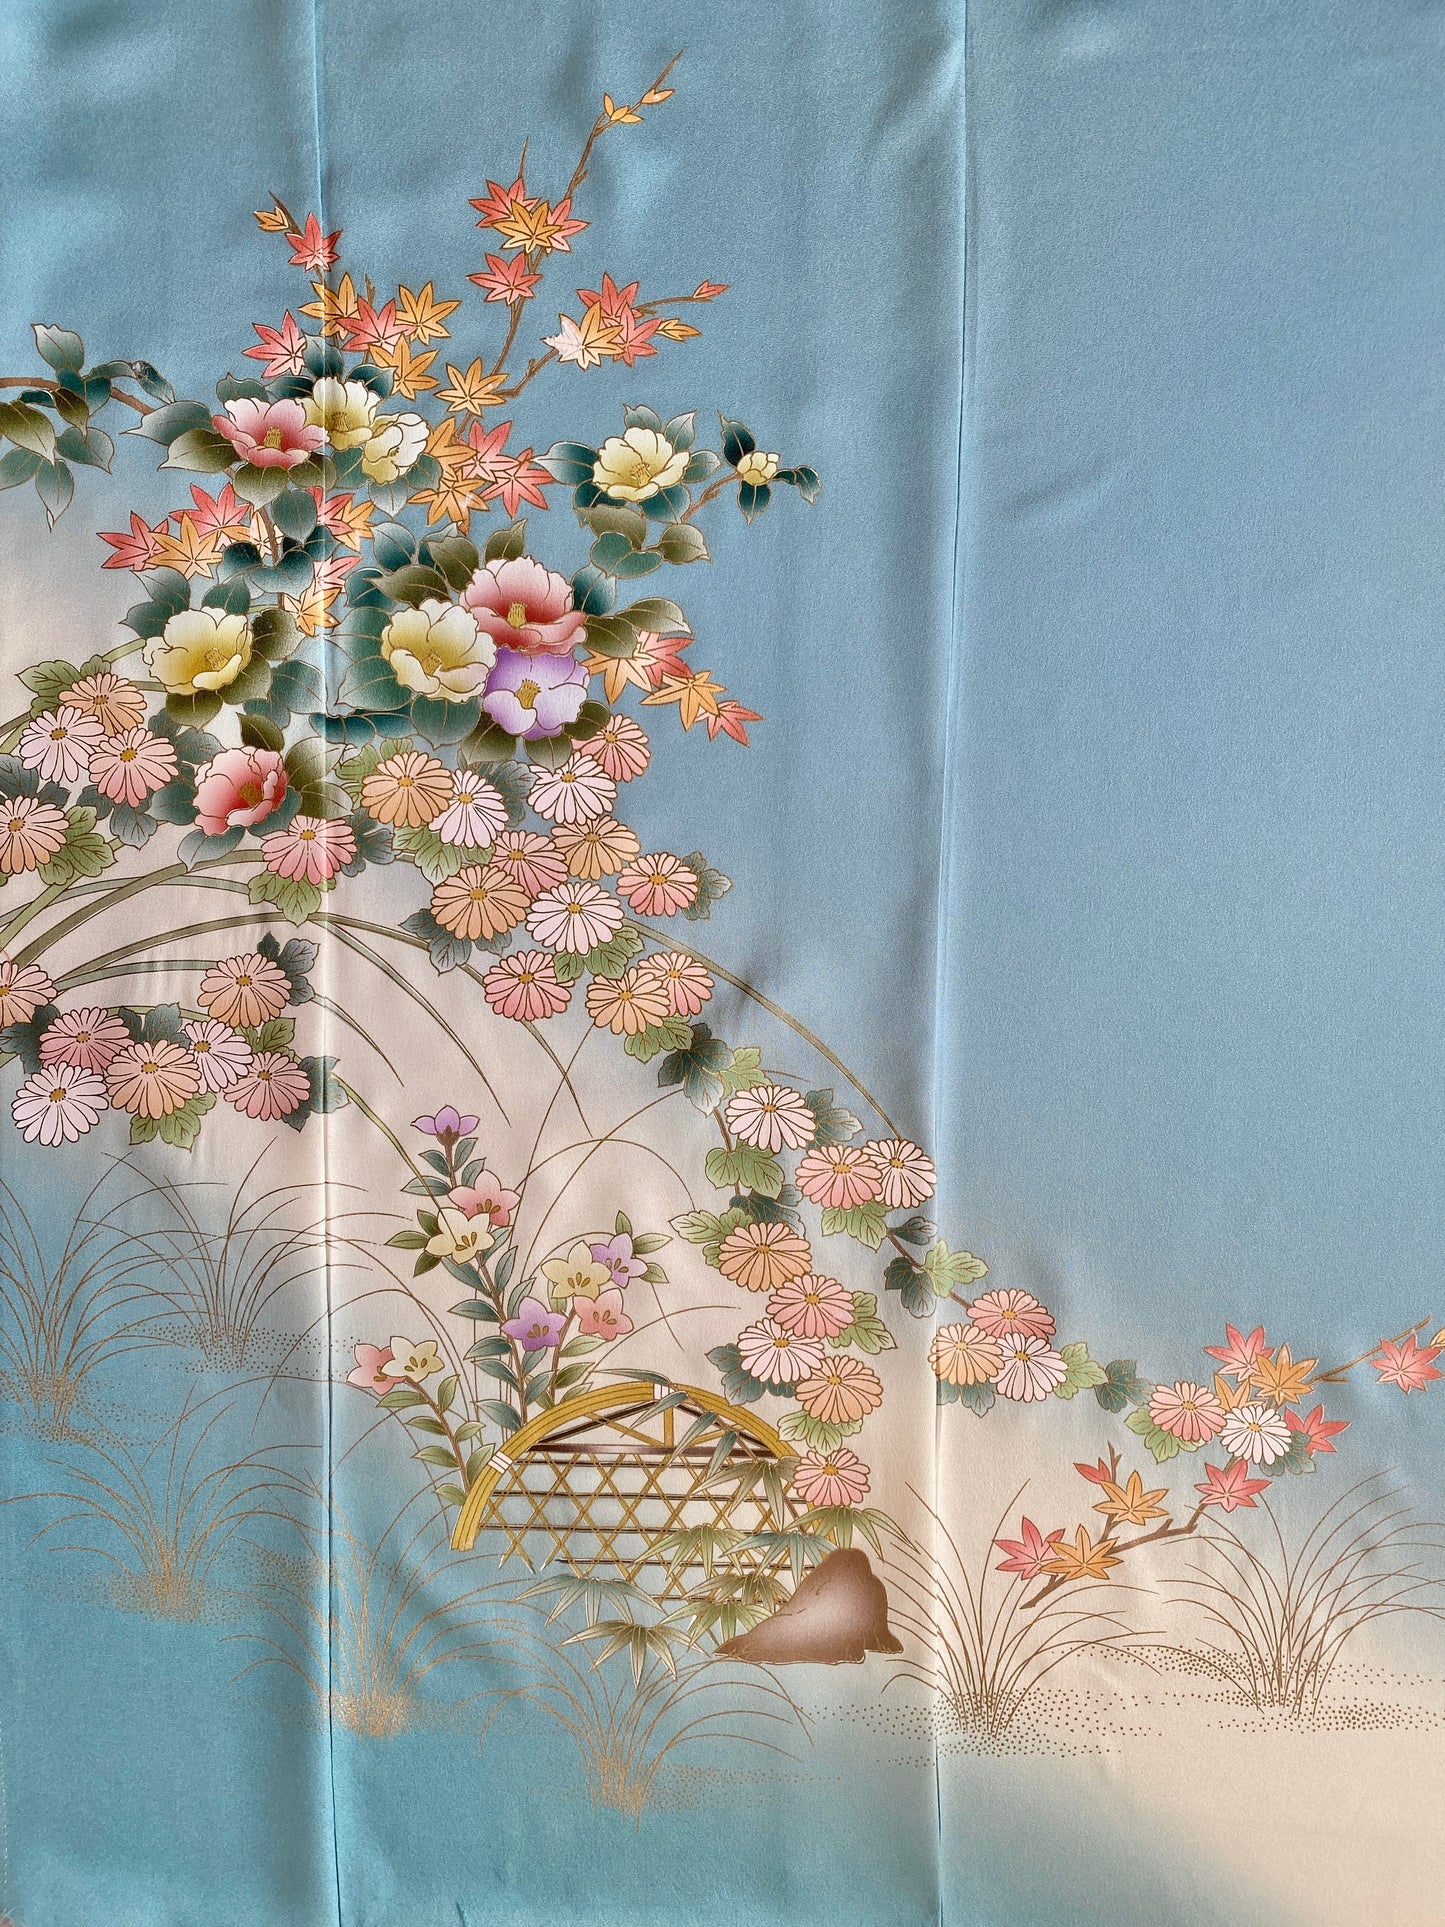 Kimono fabric for custom order  #2